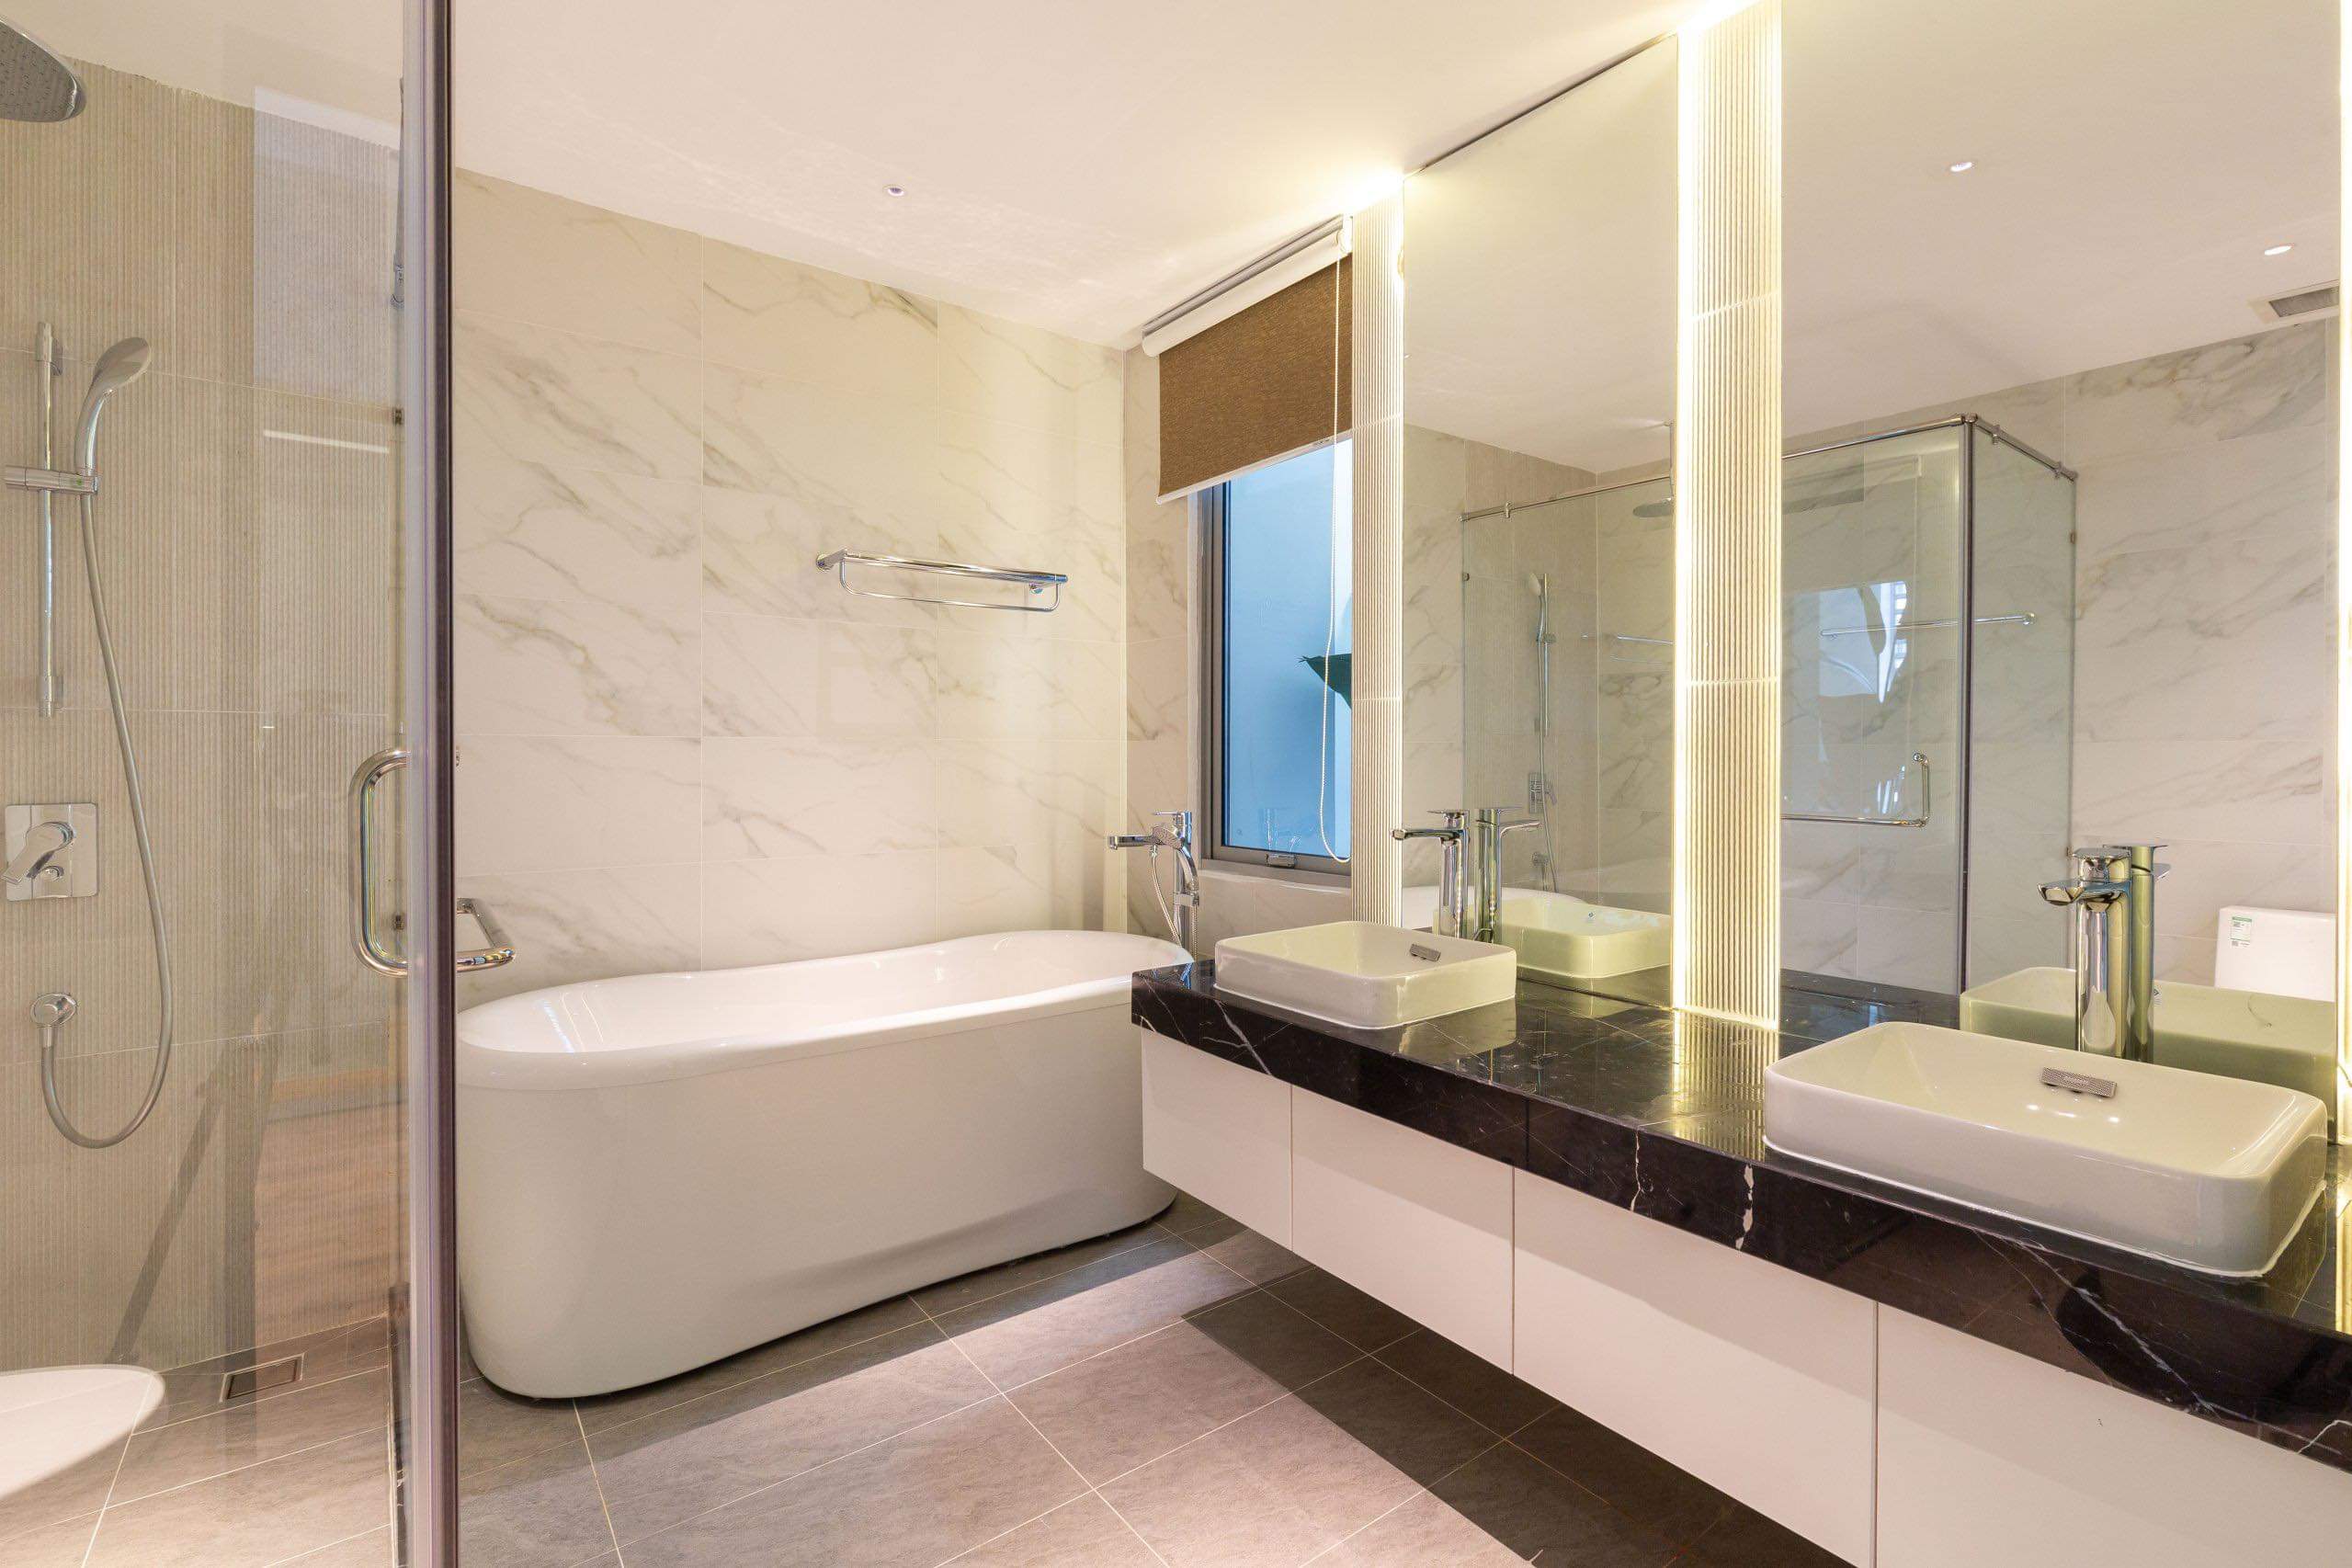 Inside a bathroom of Vinhomes Central Park penthouse apartment for rent